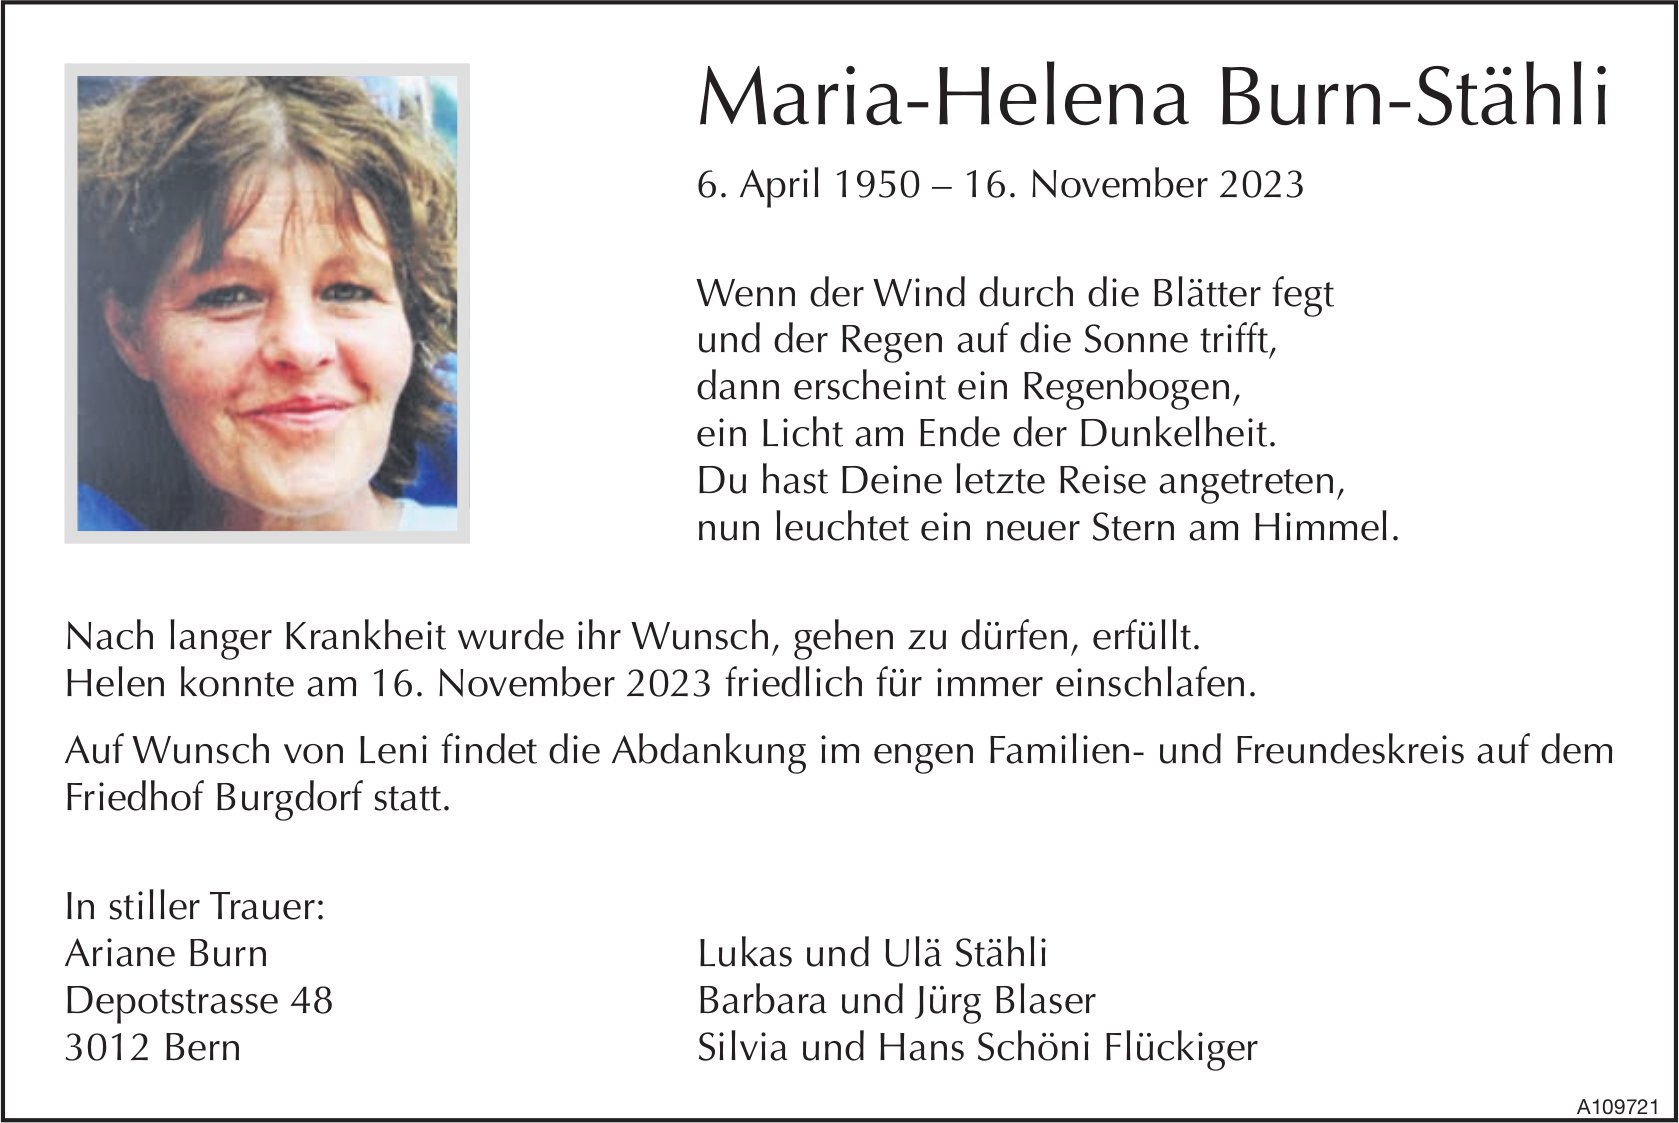 Maria-Helena Burn-Stähli, November 2023 / TA